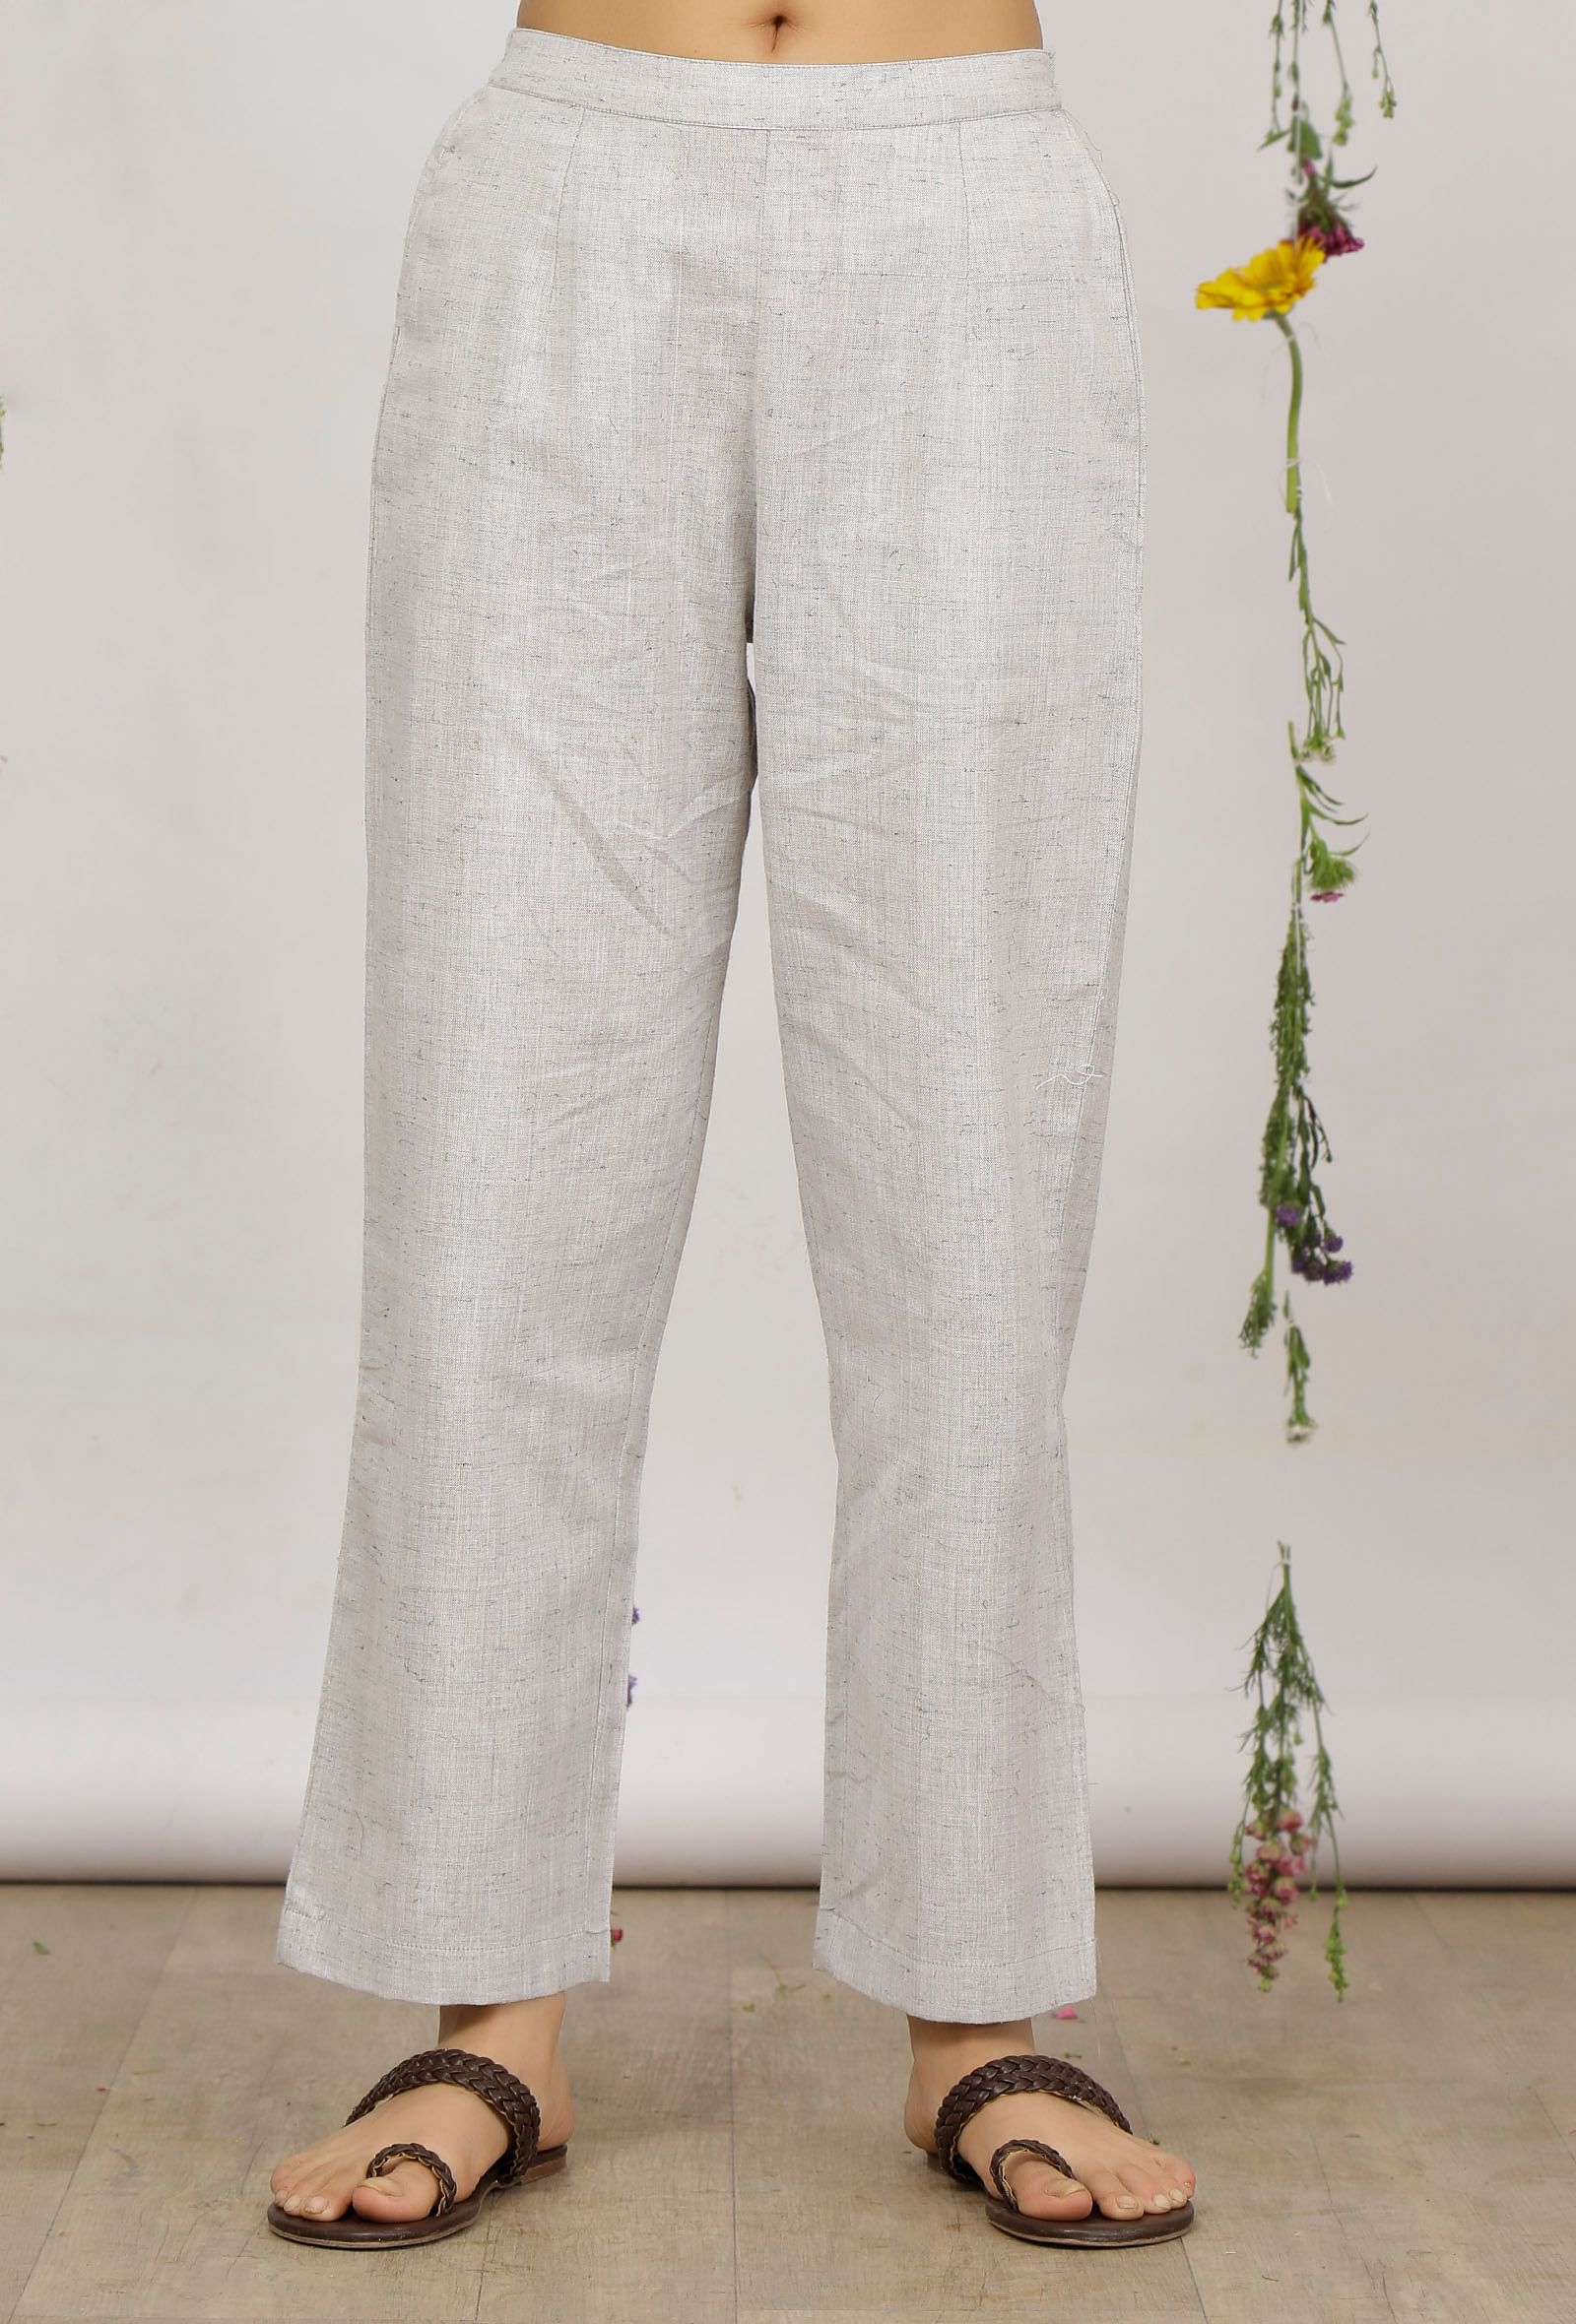 Beige Cotton Khaadi Harem Pants | Women trousers design, Trouser pants  pattern for women, Cotton pants women